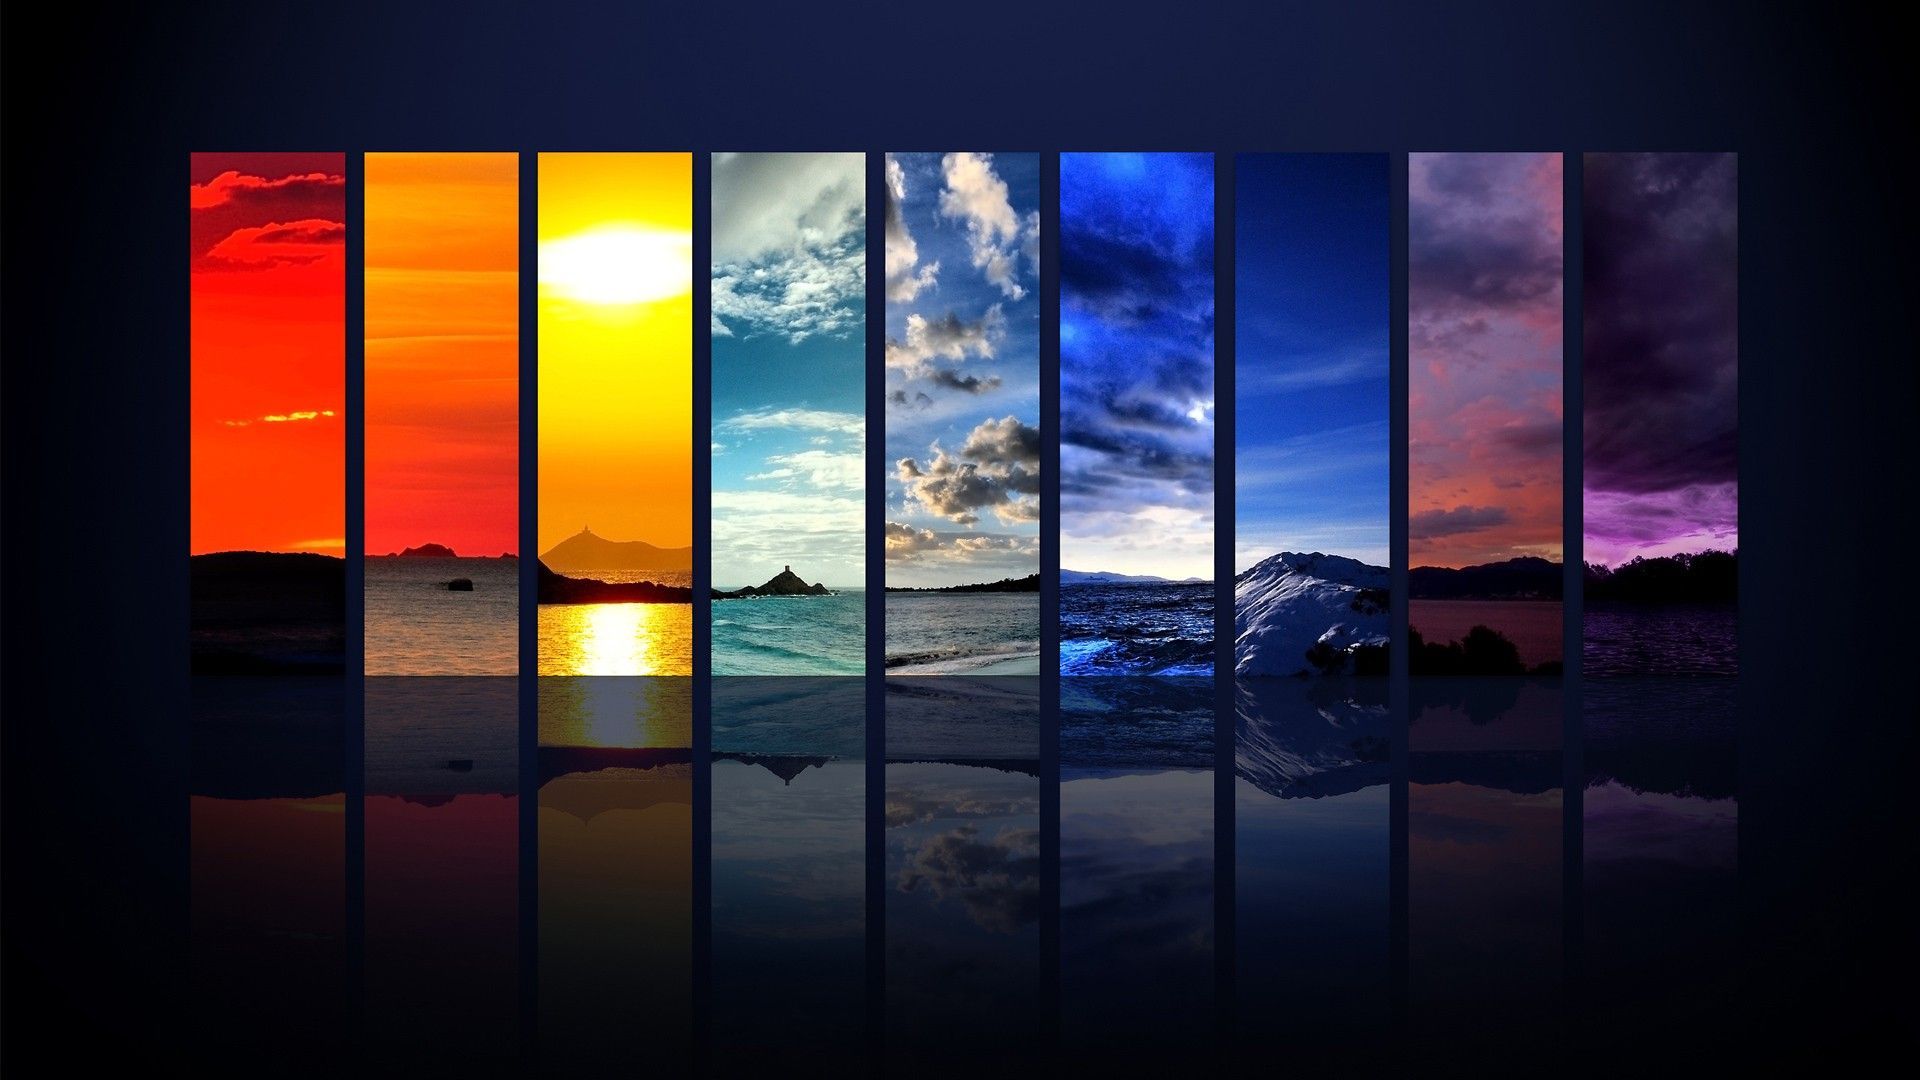 30+ Awesome Desktop Backgrounds